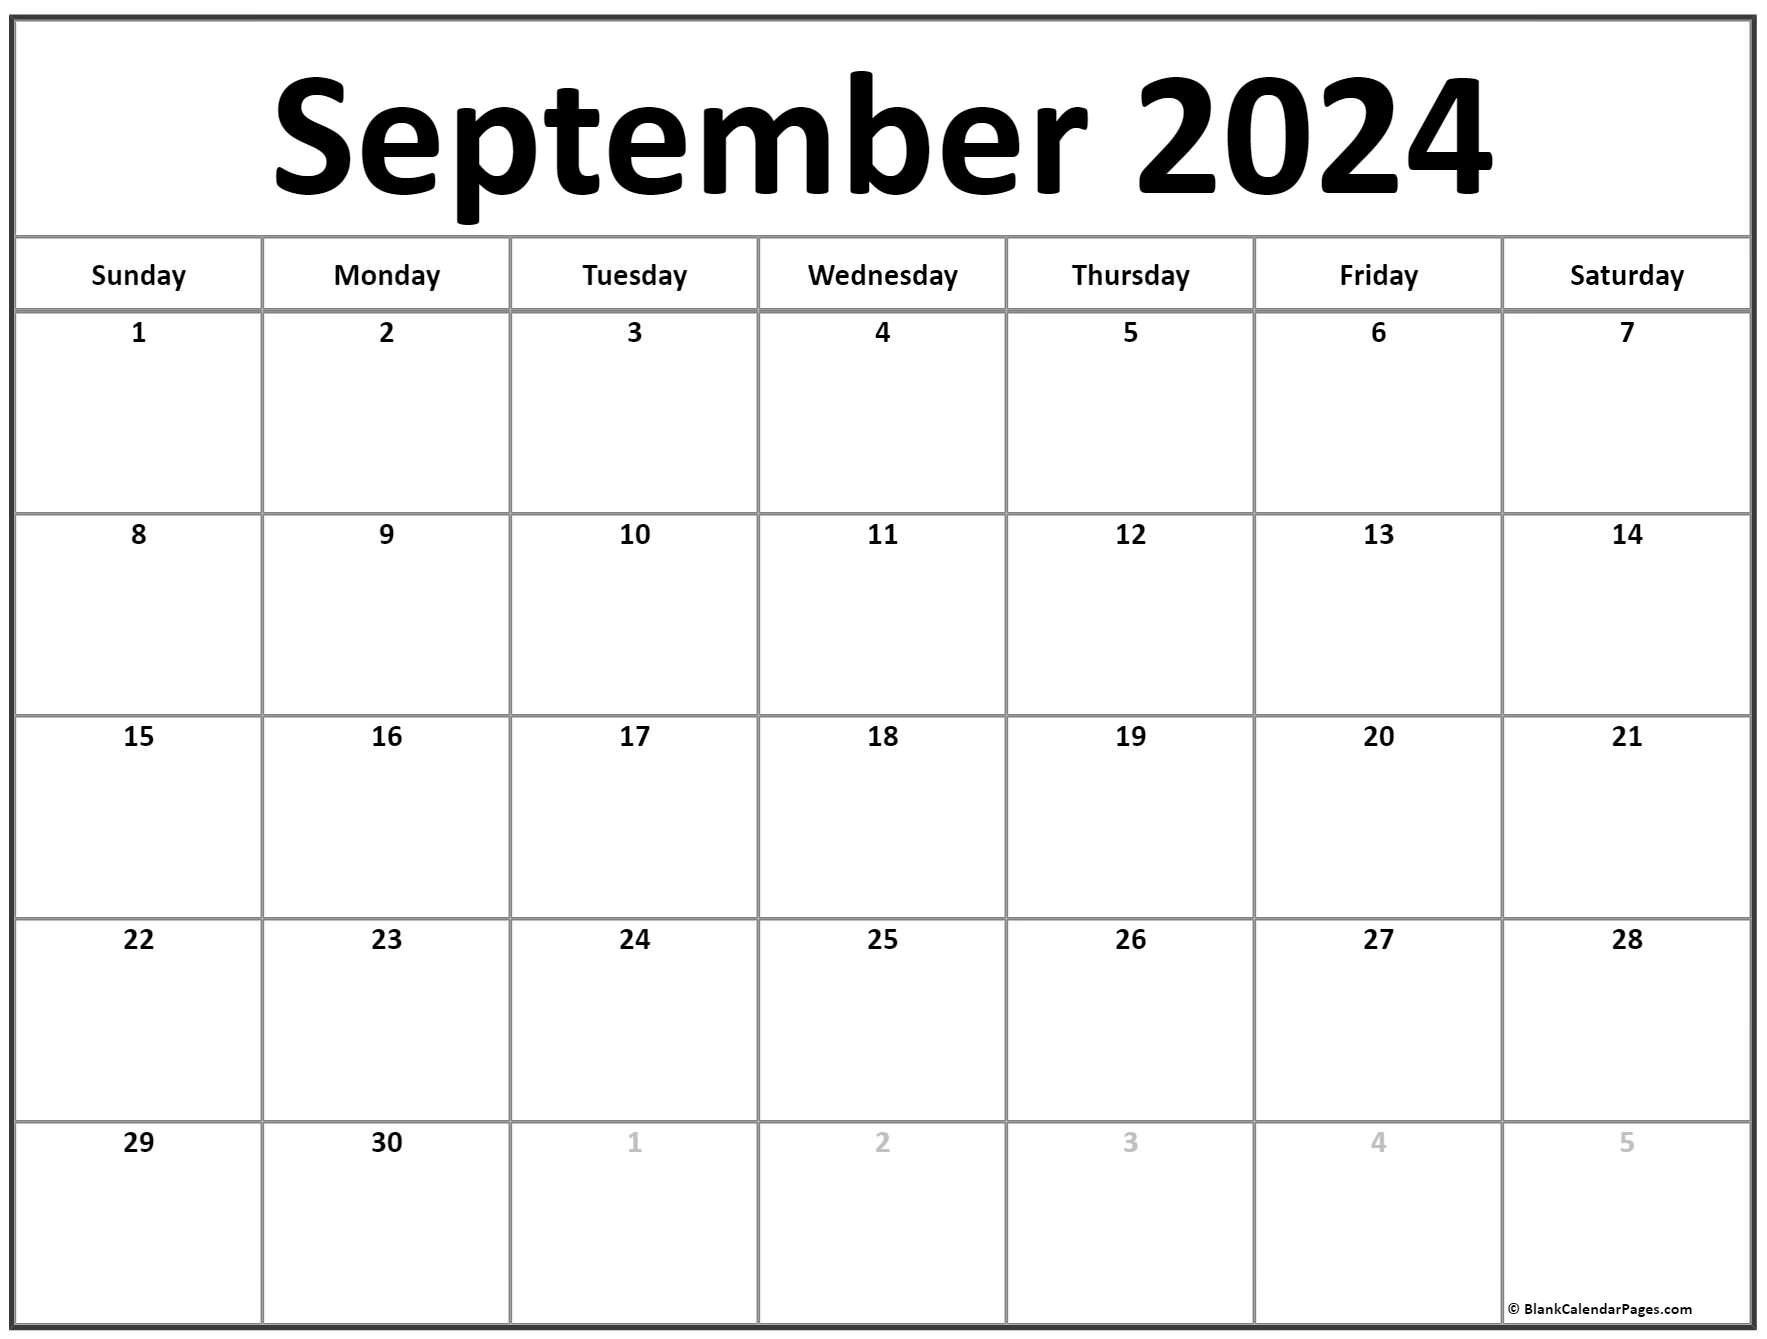 Sept 2022 Calendar September 2022 Calendar | Free Printable Calendar Templates